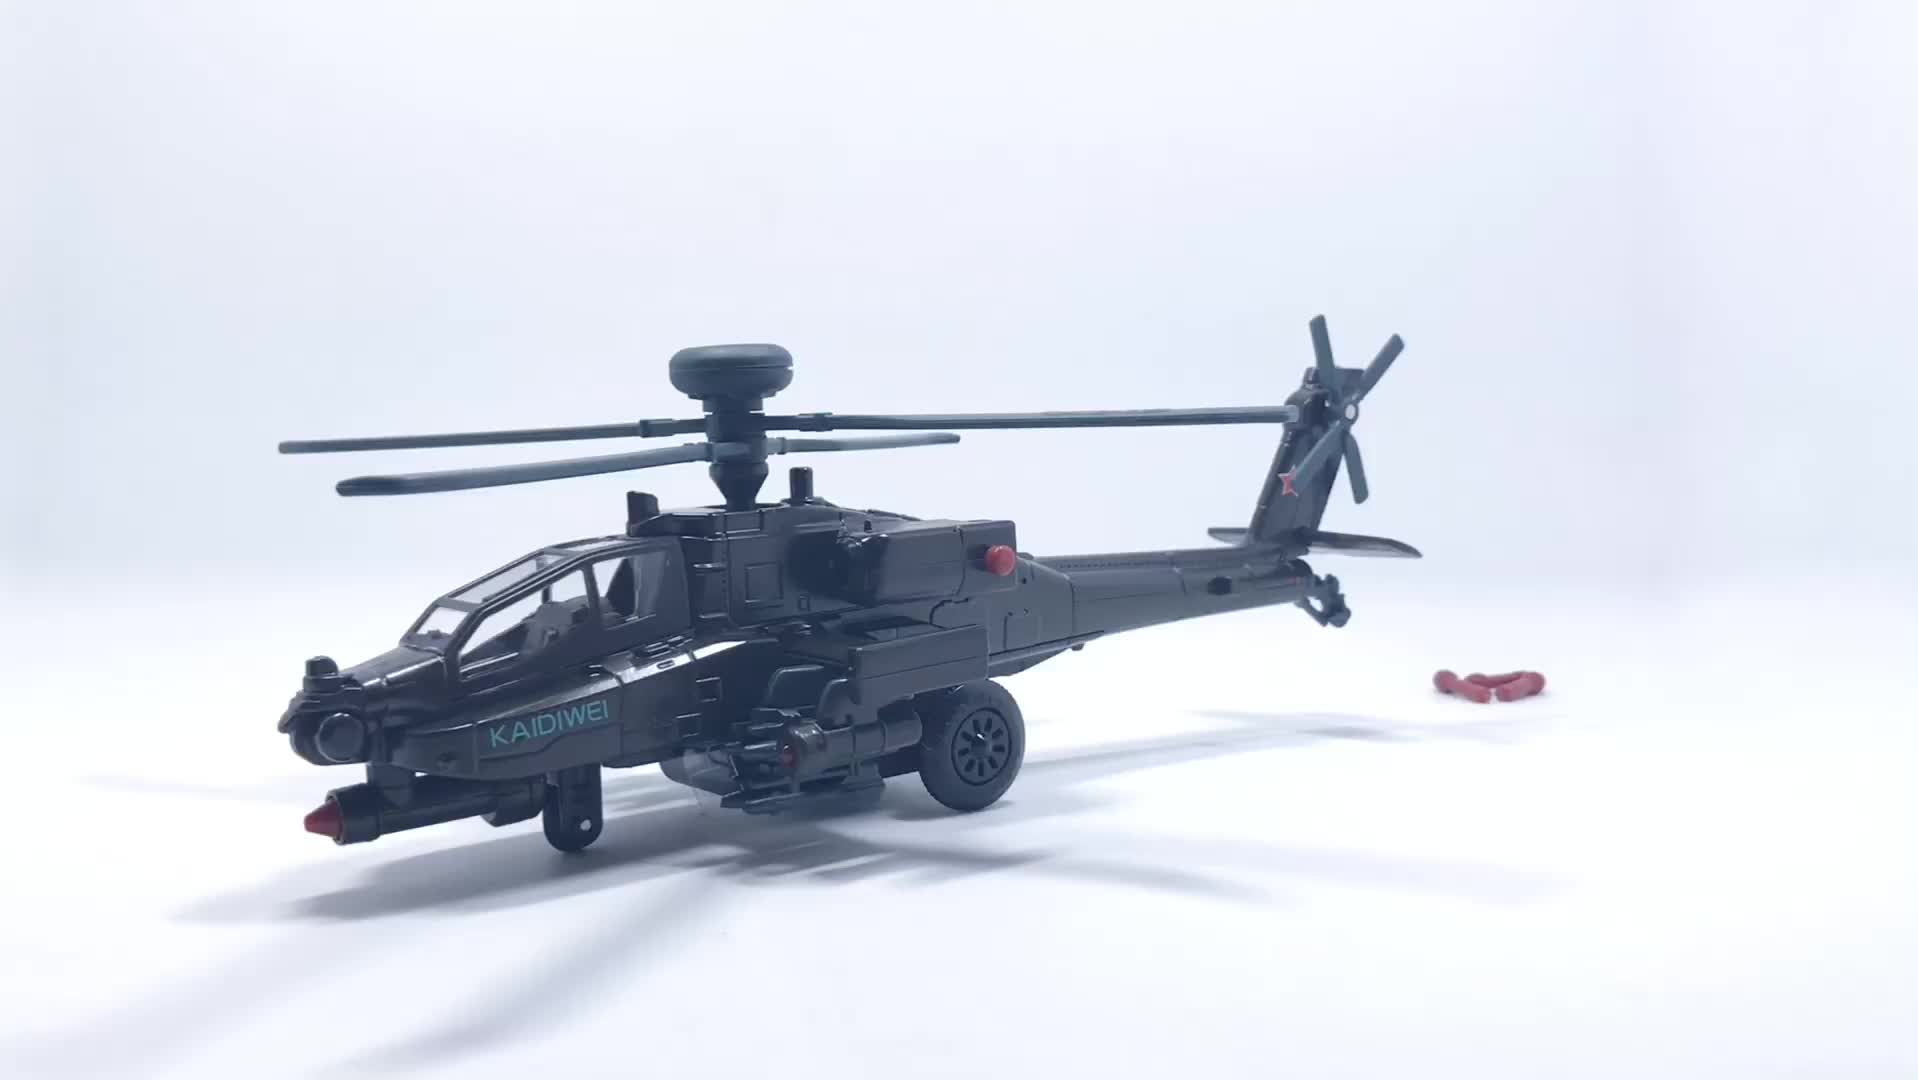 Kaidiwei 합금 건쉽 1:64 모델 아파치 항공기 AH64D 군사 블랙 호크 항공 모델